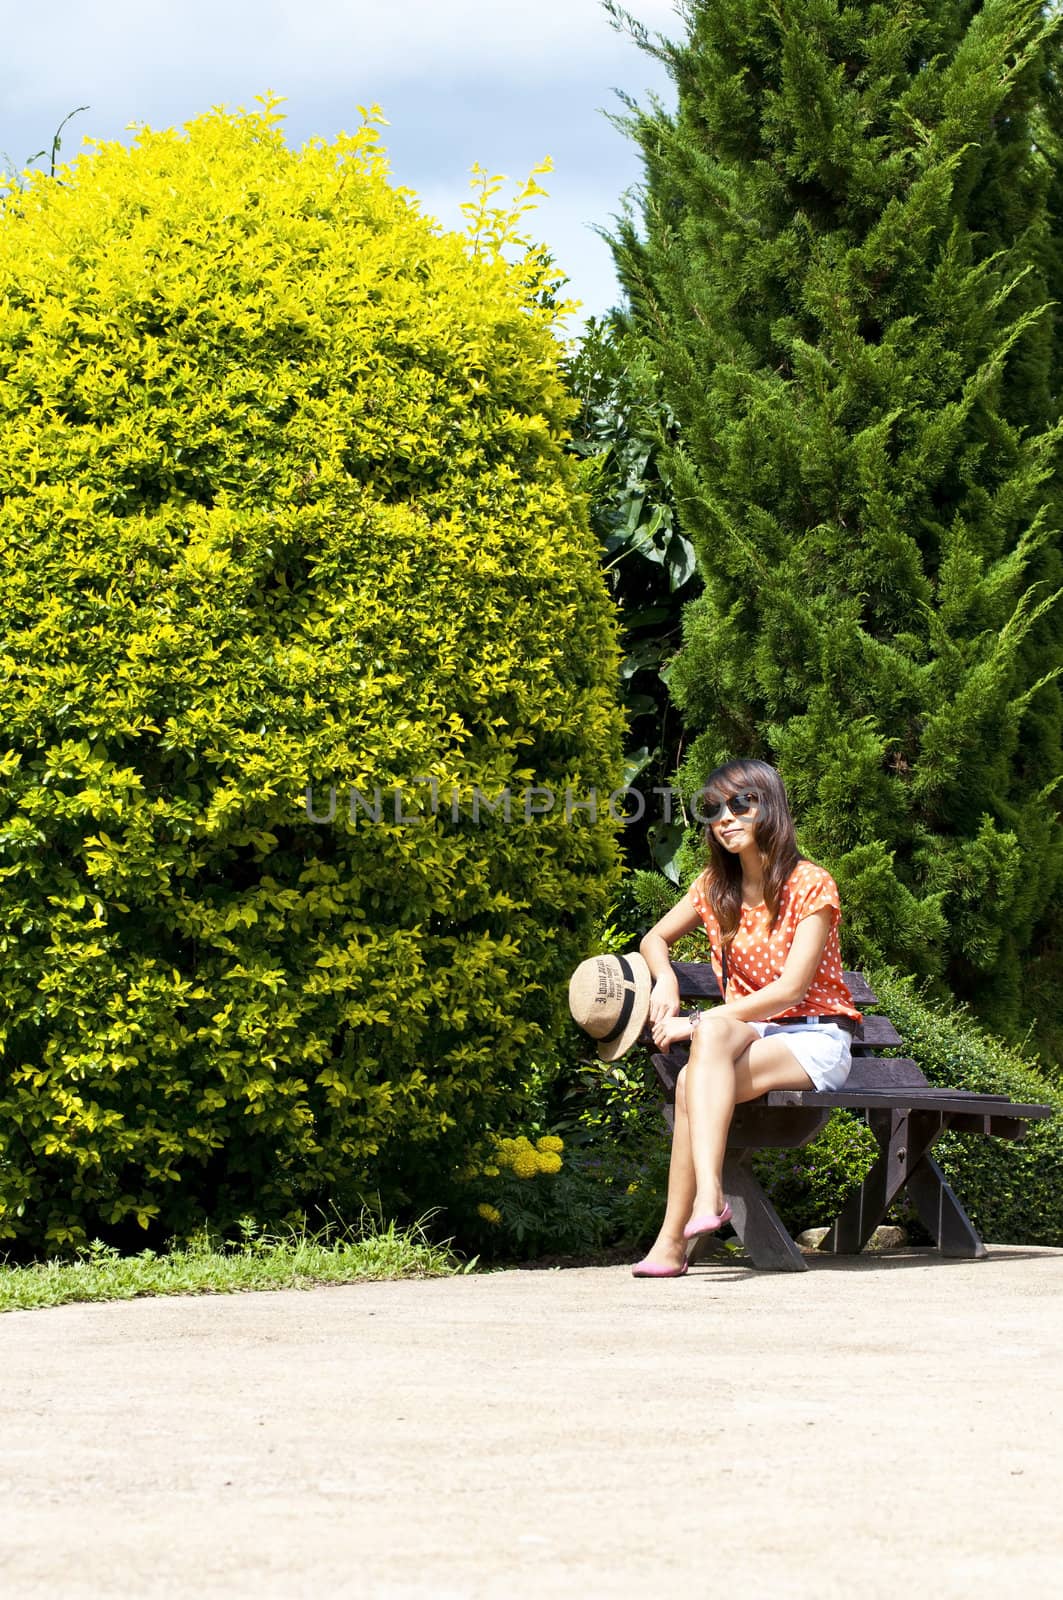 Portrait Of Asian Young Woman In garden by Yuri2012